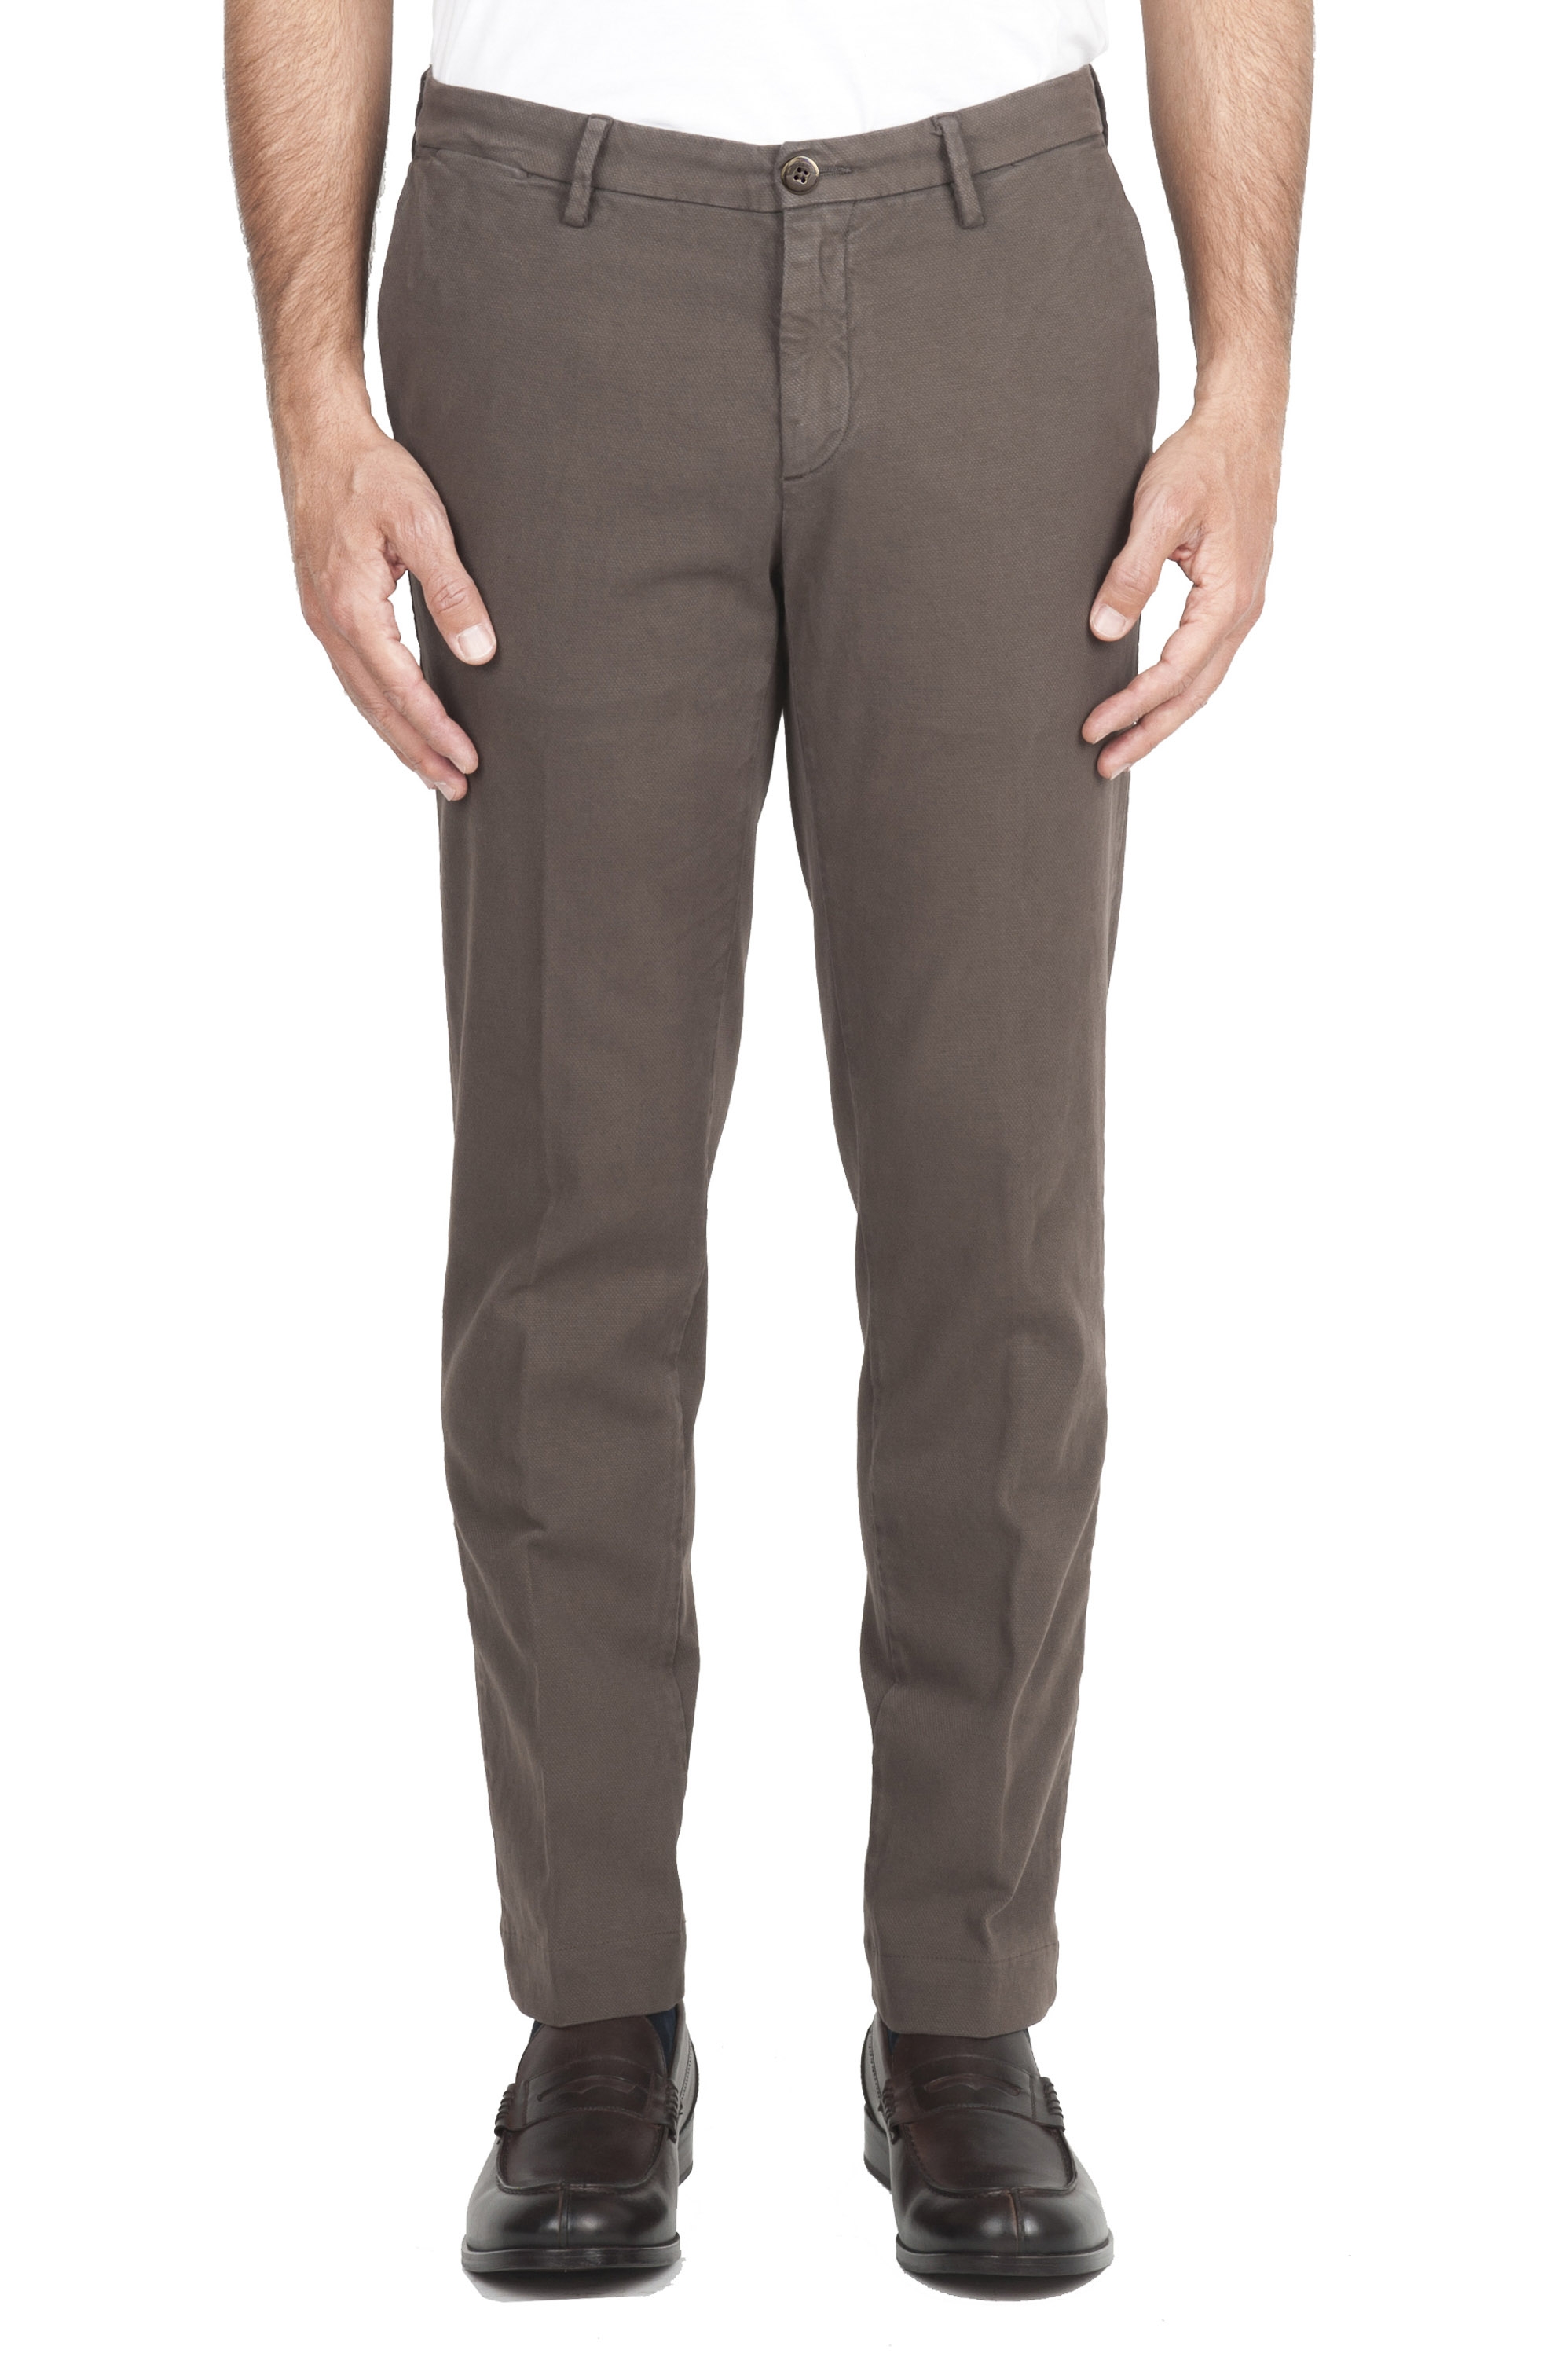 SBU 02924_2020AW Classic chino pants in brown stretch cotton 01